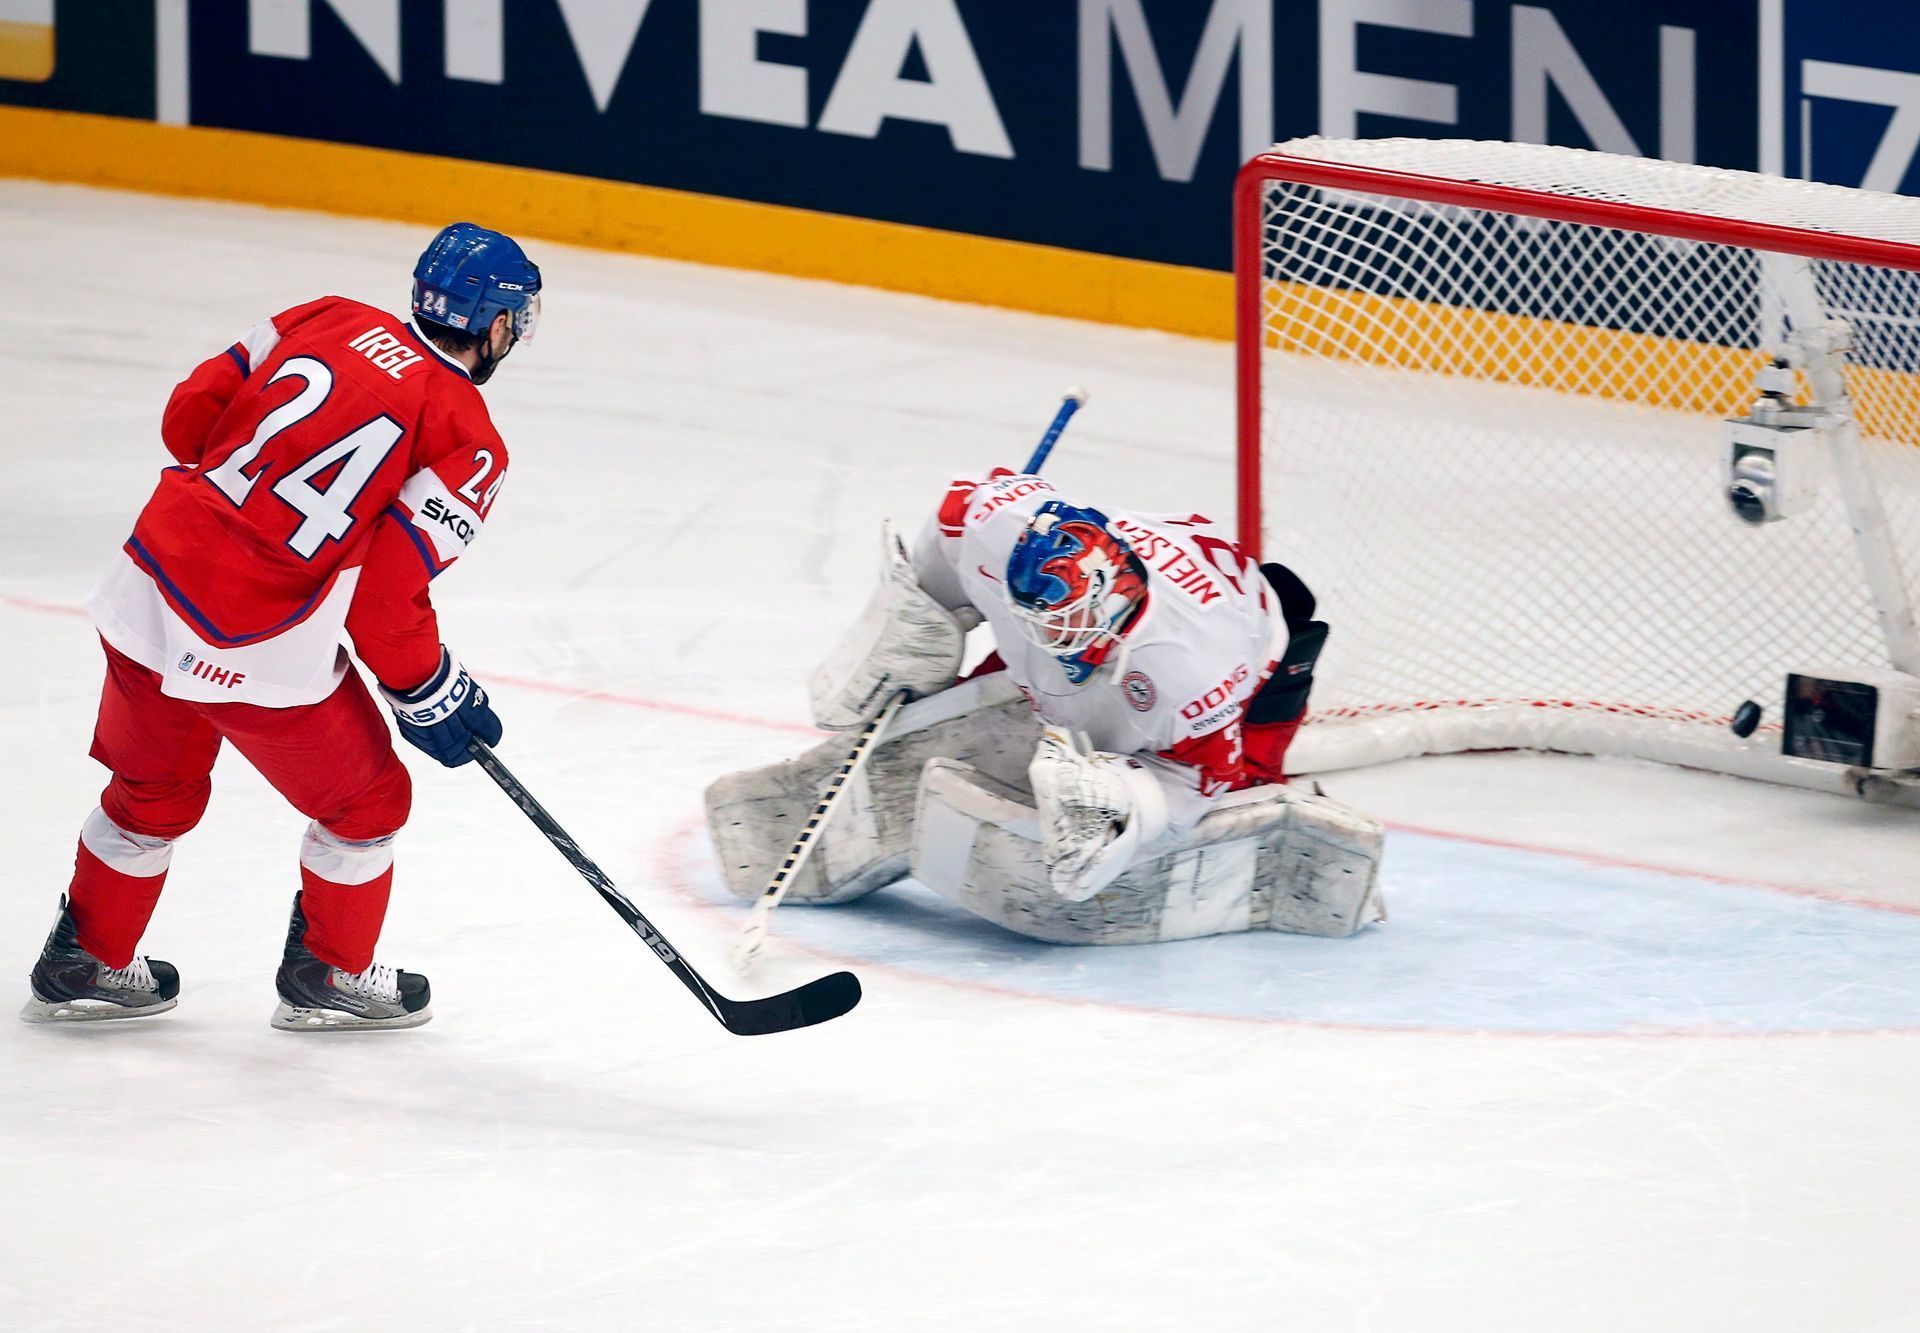 Hokej, MS 2013, Česko - Dánsko: Zbyněk Irgl  - Simon Nielsen